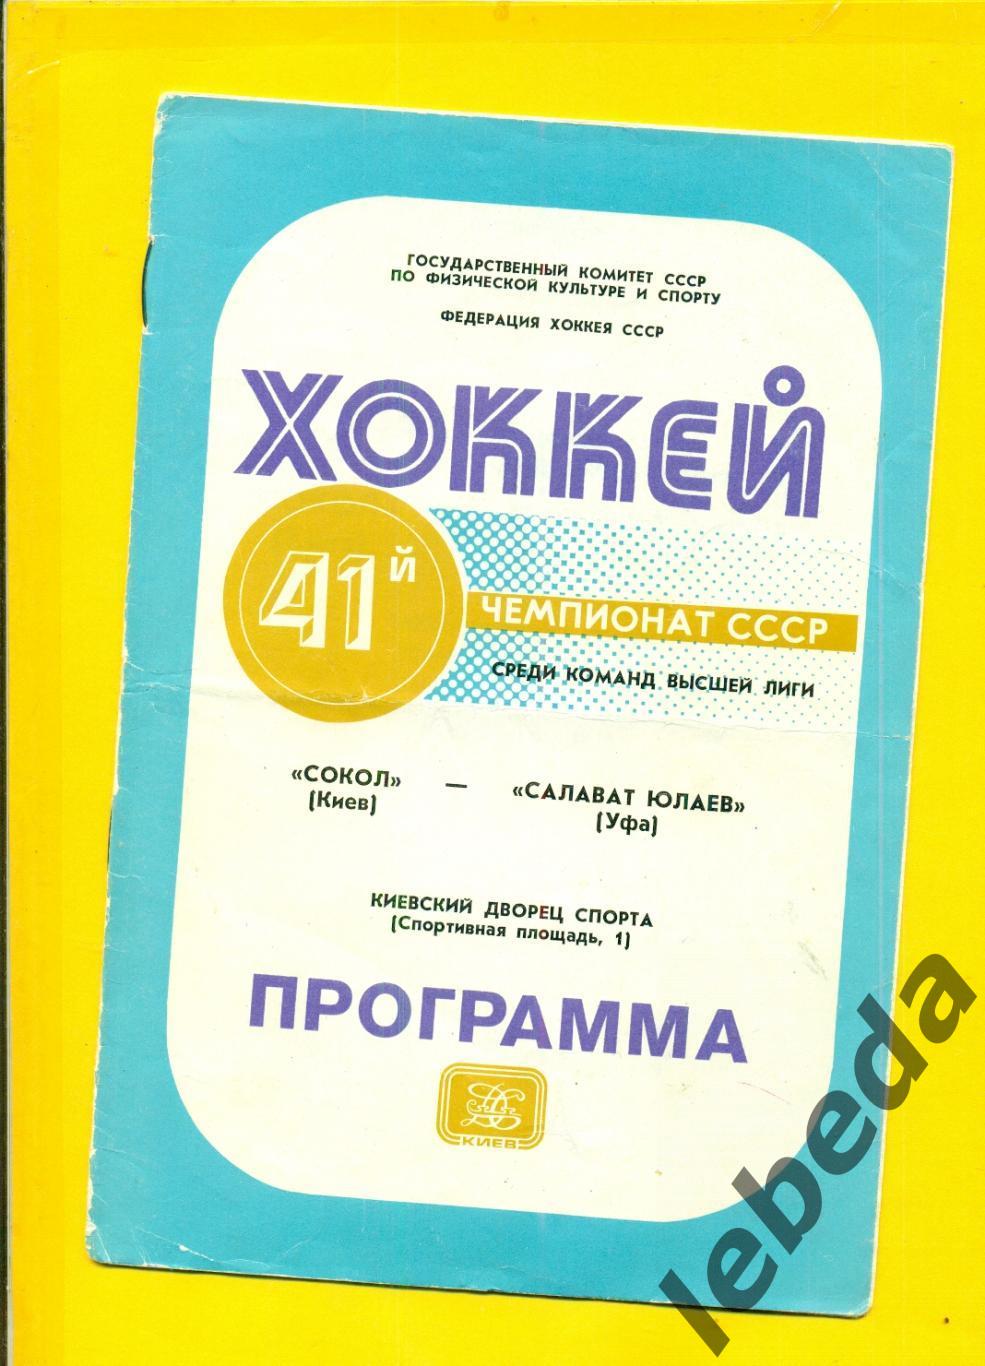 Сокол Киев - Салават Юлаев Уфа - 1986 /1987г. ( 23.10.86.)